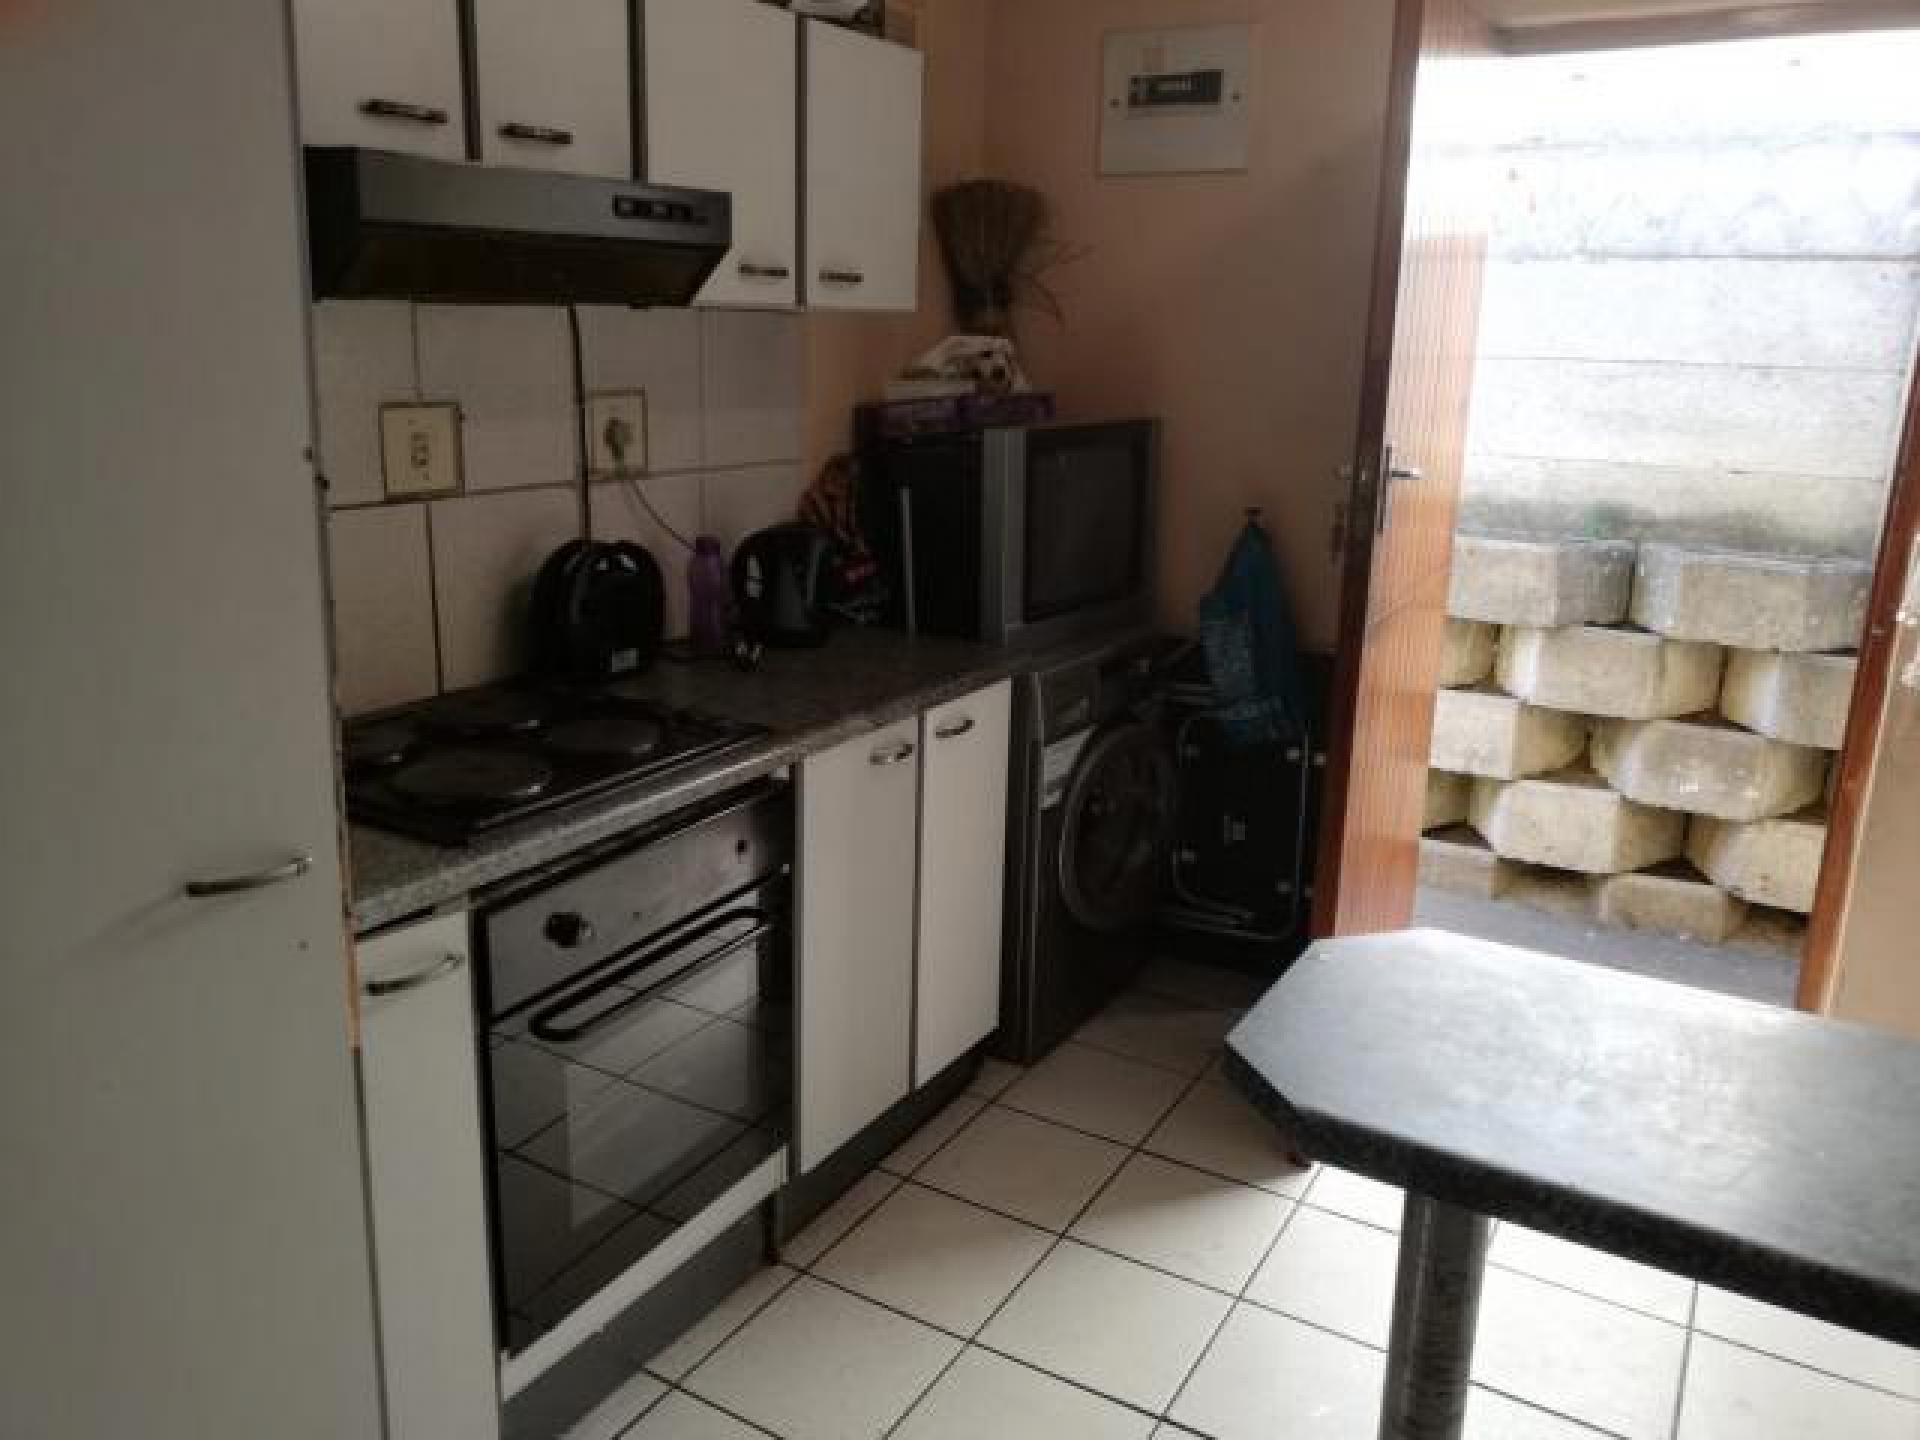 Kitchen of property in Bellair - DBN